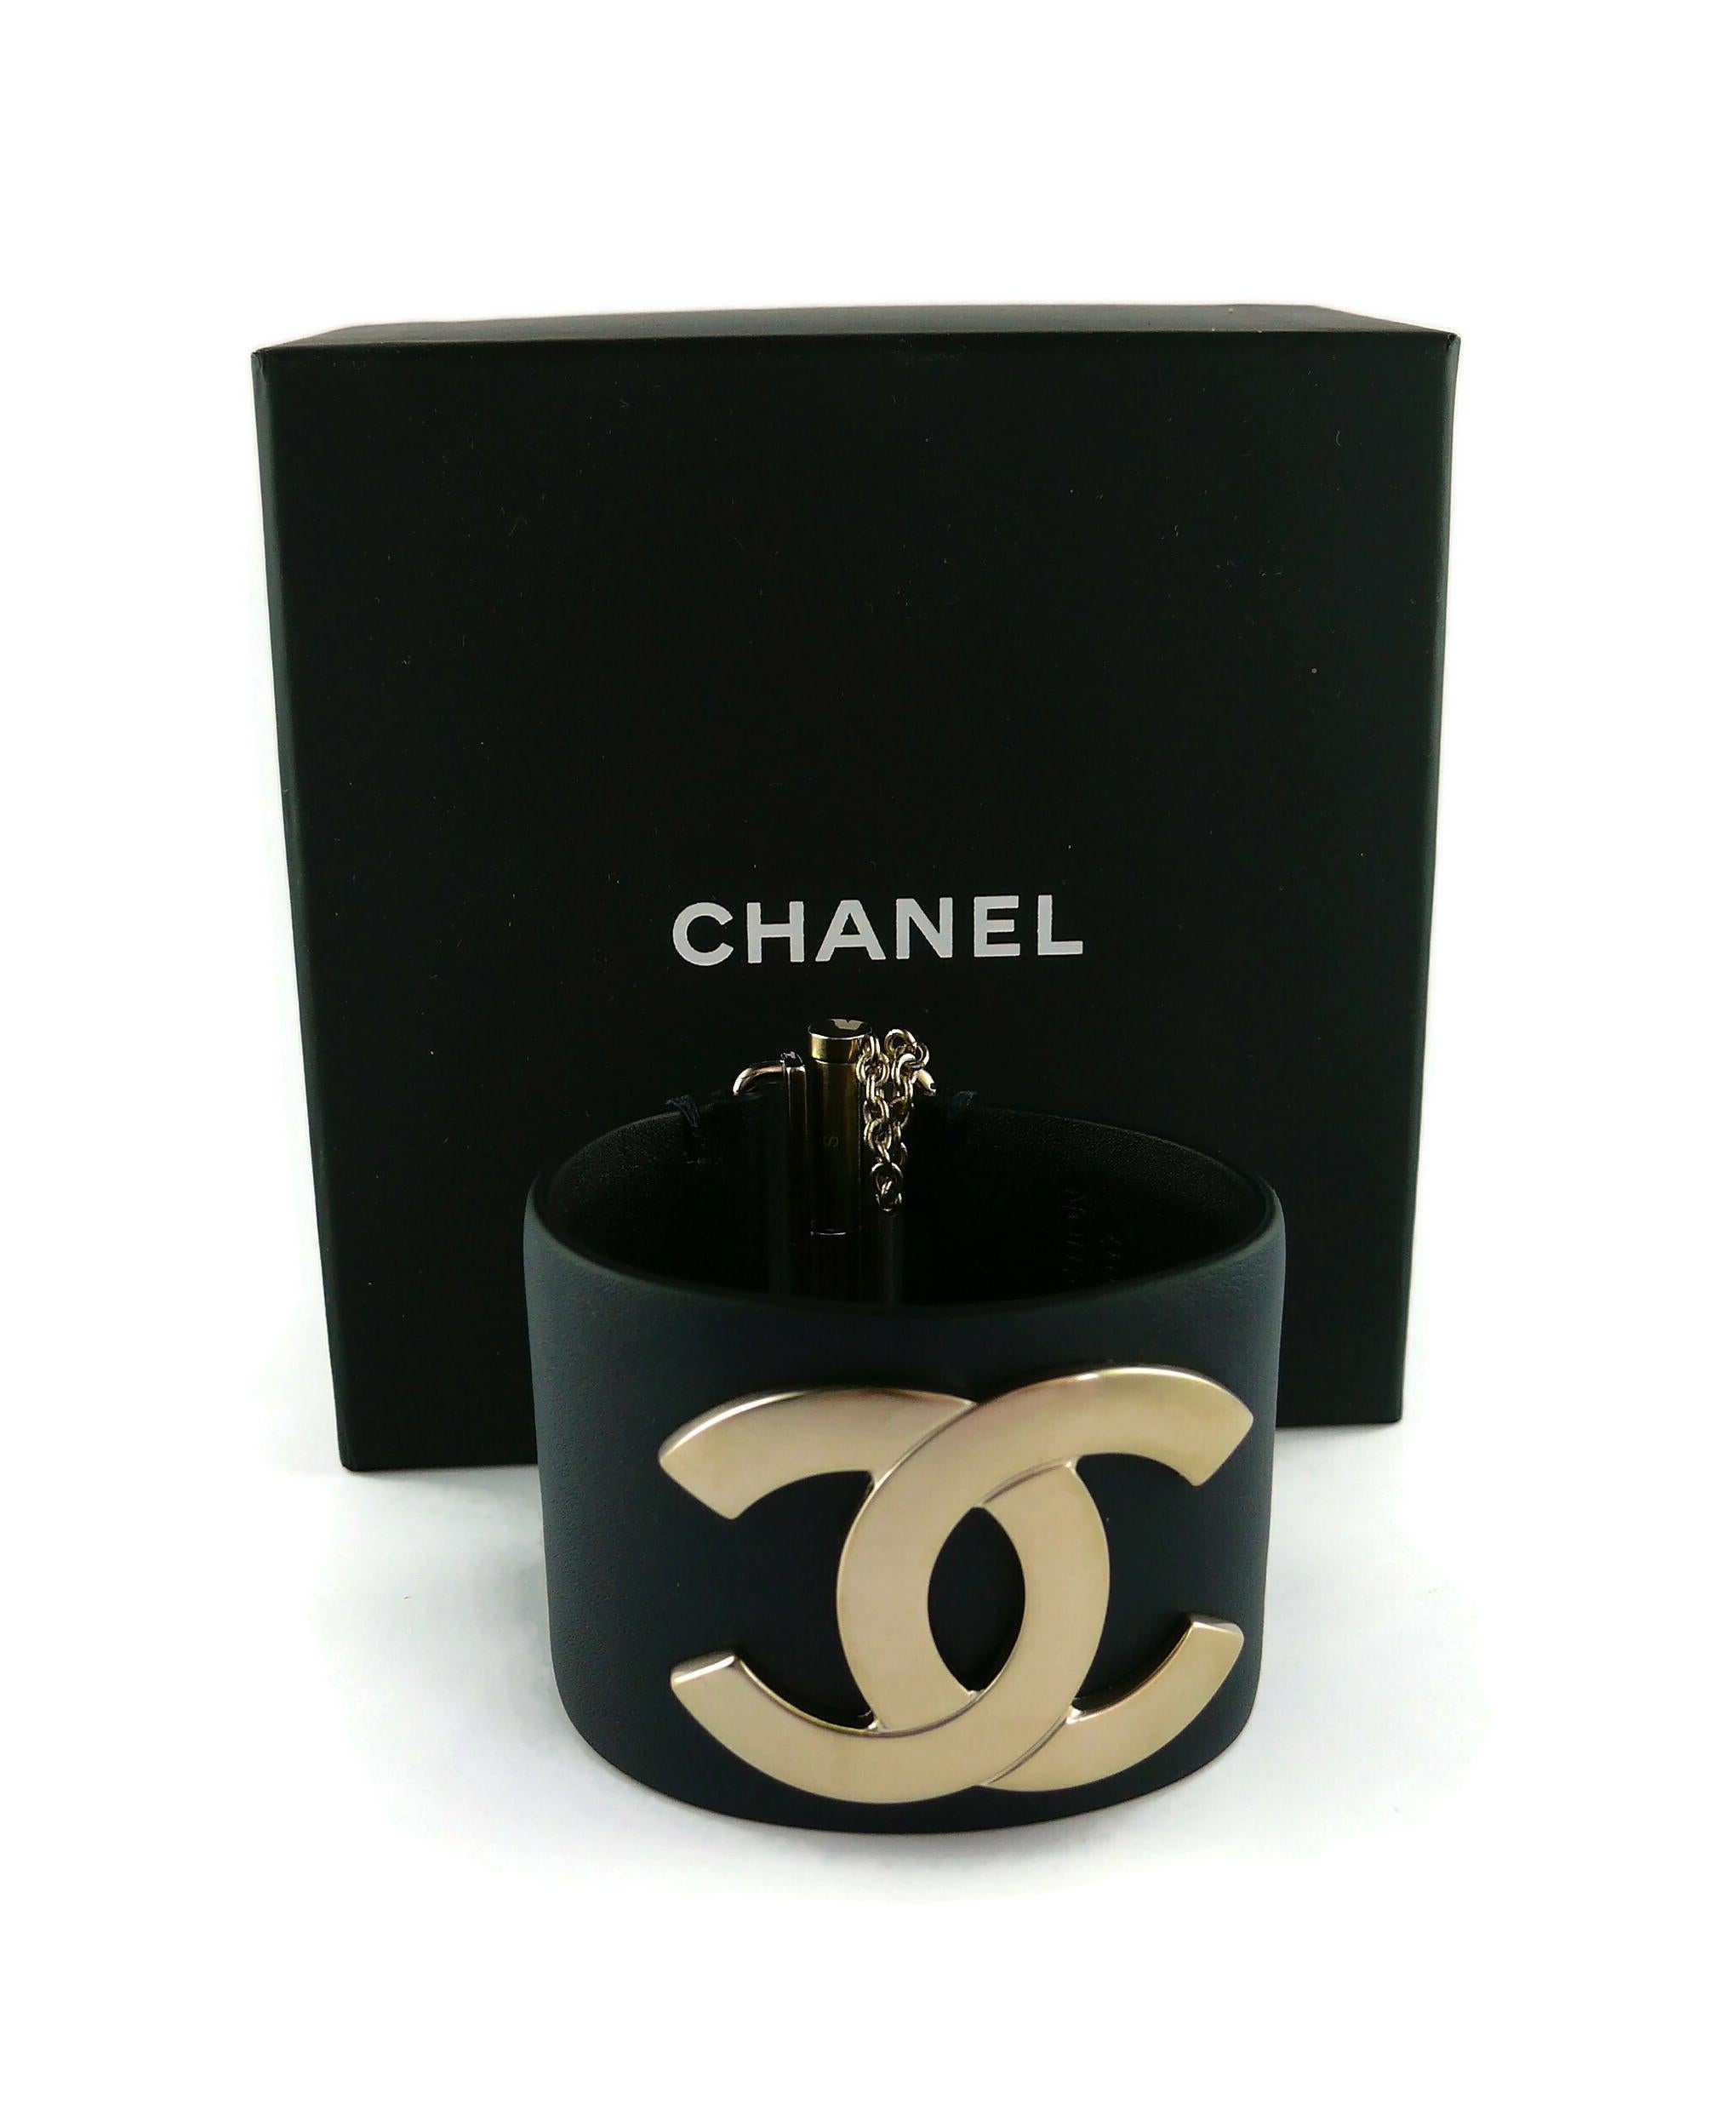 Chanel CC Logo Exclusive Edition 2017 Wide Dark Navy Blue Leather Cuff Bracelet 2